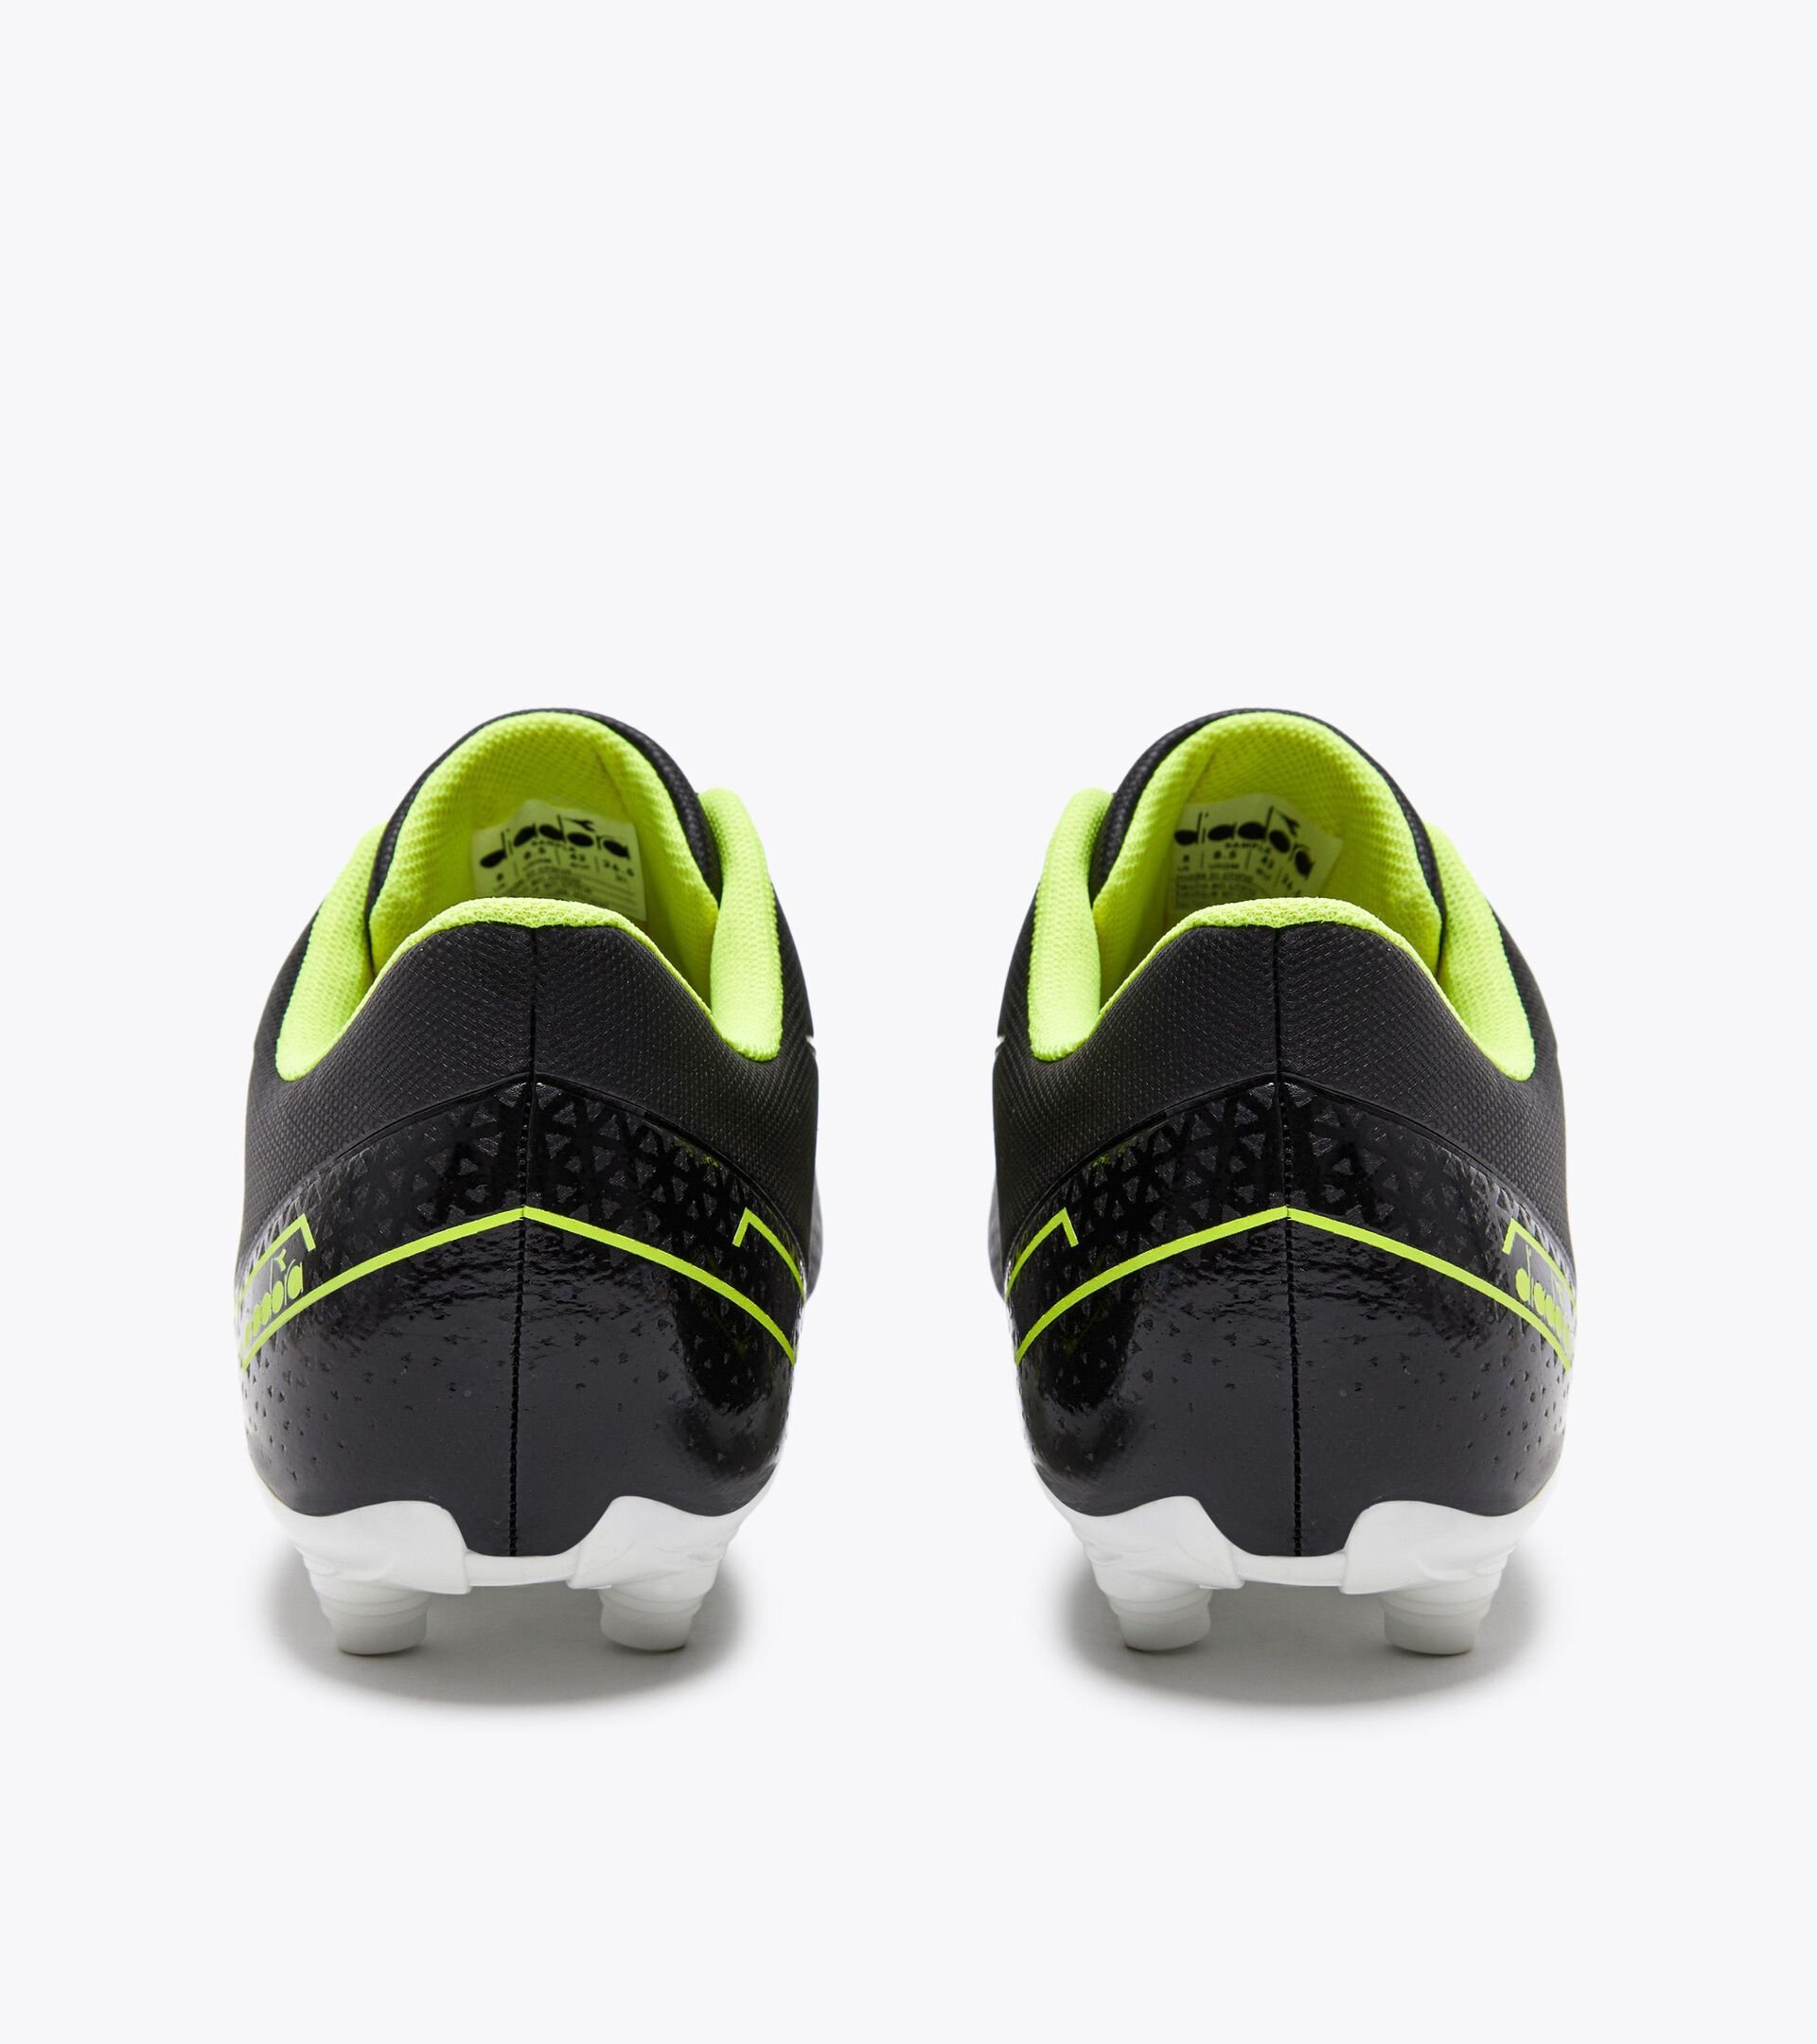 Chaussures de football pour terrains compacts - Homme PICHICHI 6 MG14 NERO/GIALLO FL DD/BIANCO OTTIC - Diadora